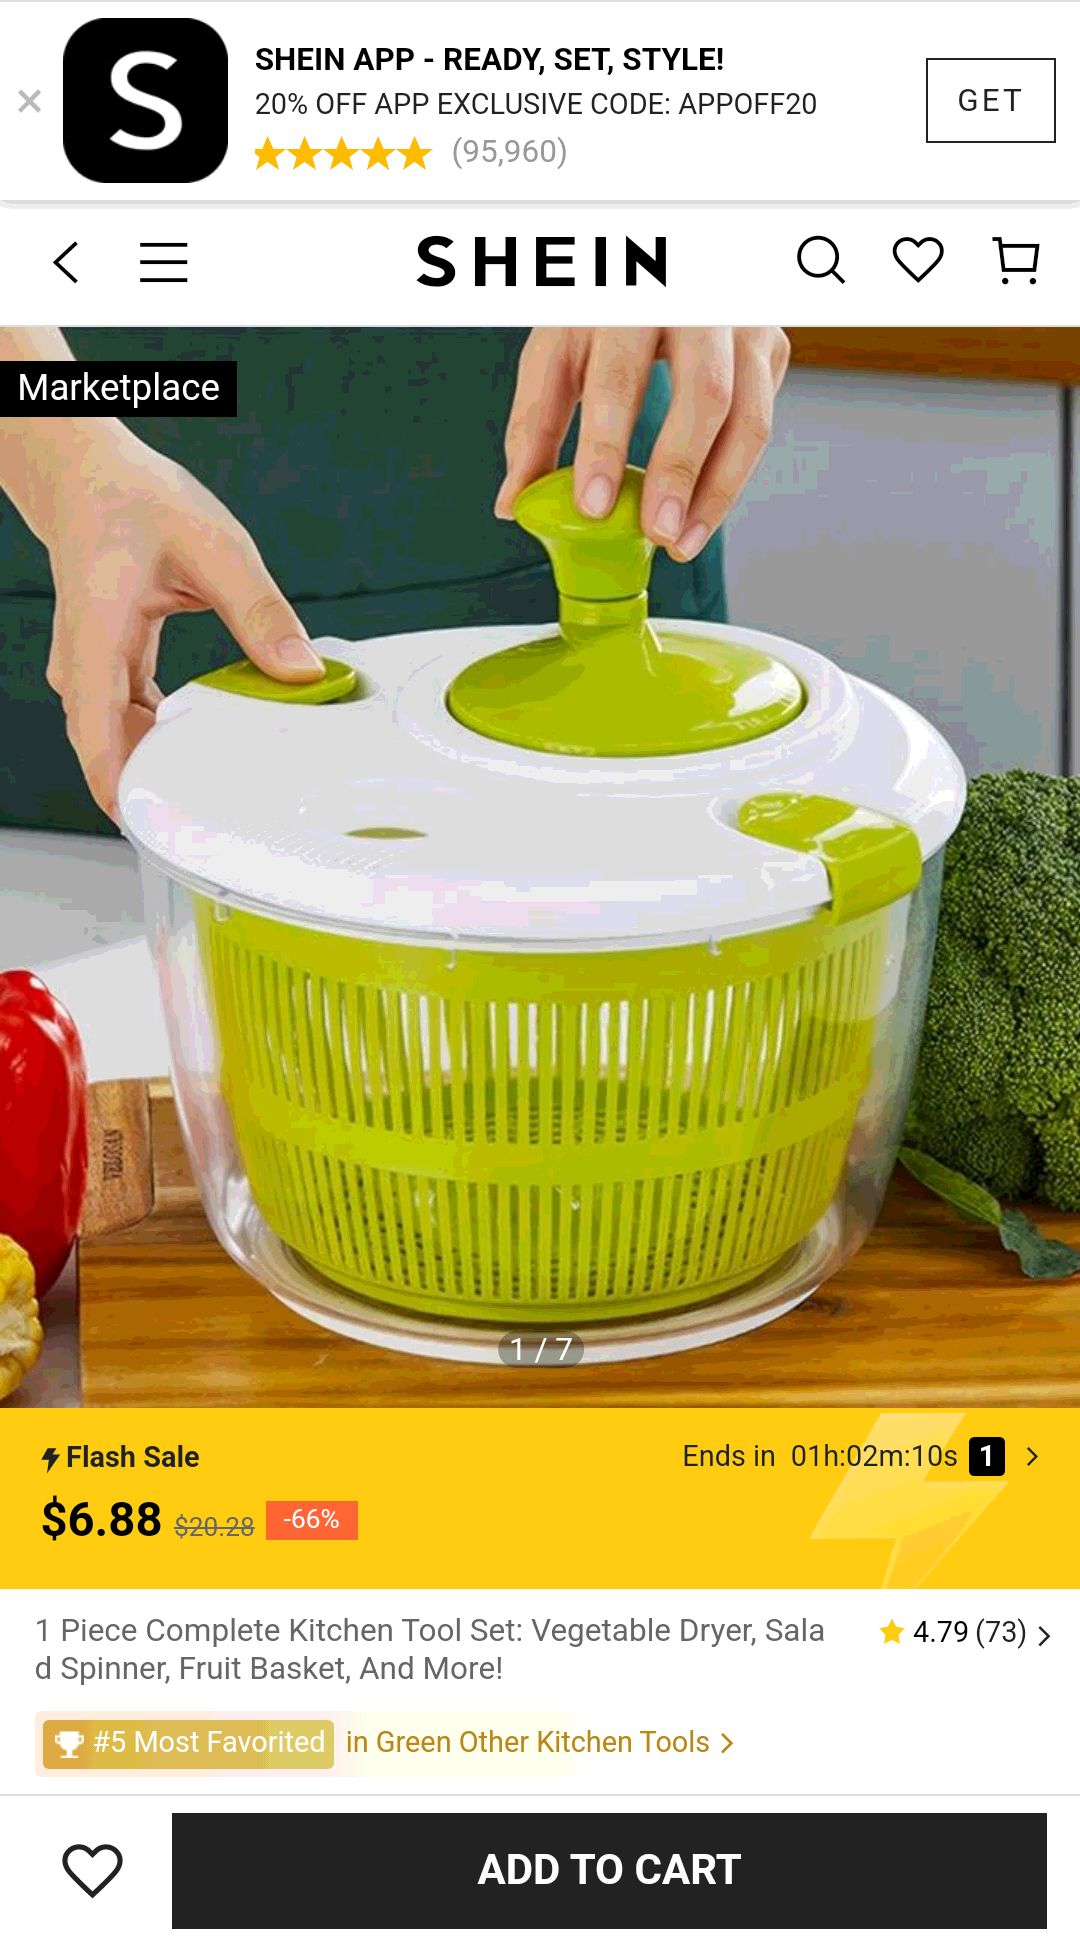 1 piece Complete Kitchen Tool Set: Vegetable Dryer, Salad Spinner, Fruit Basket, and More! | SHEIN USA